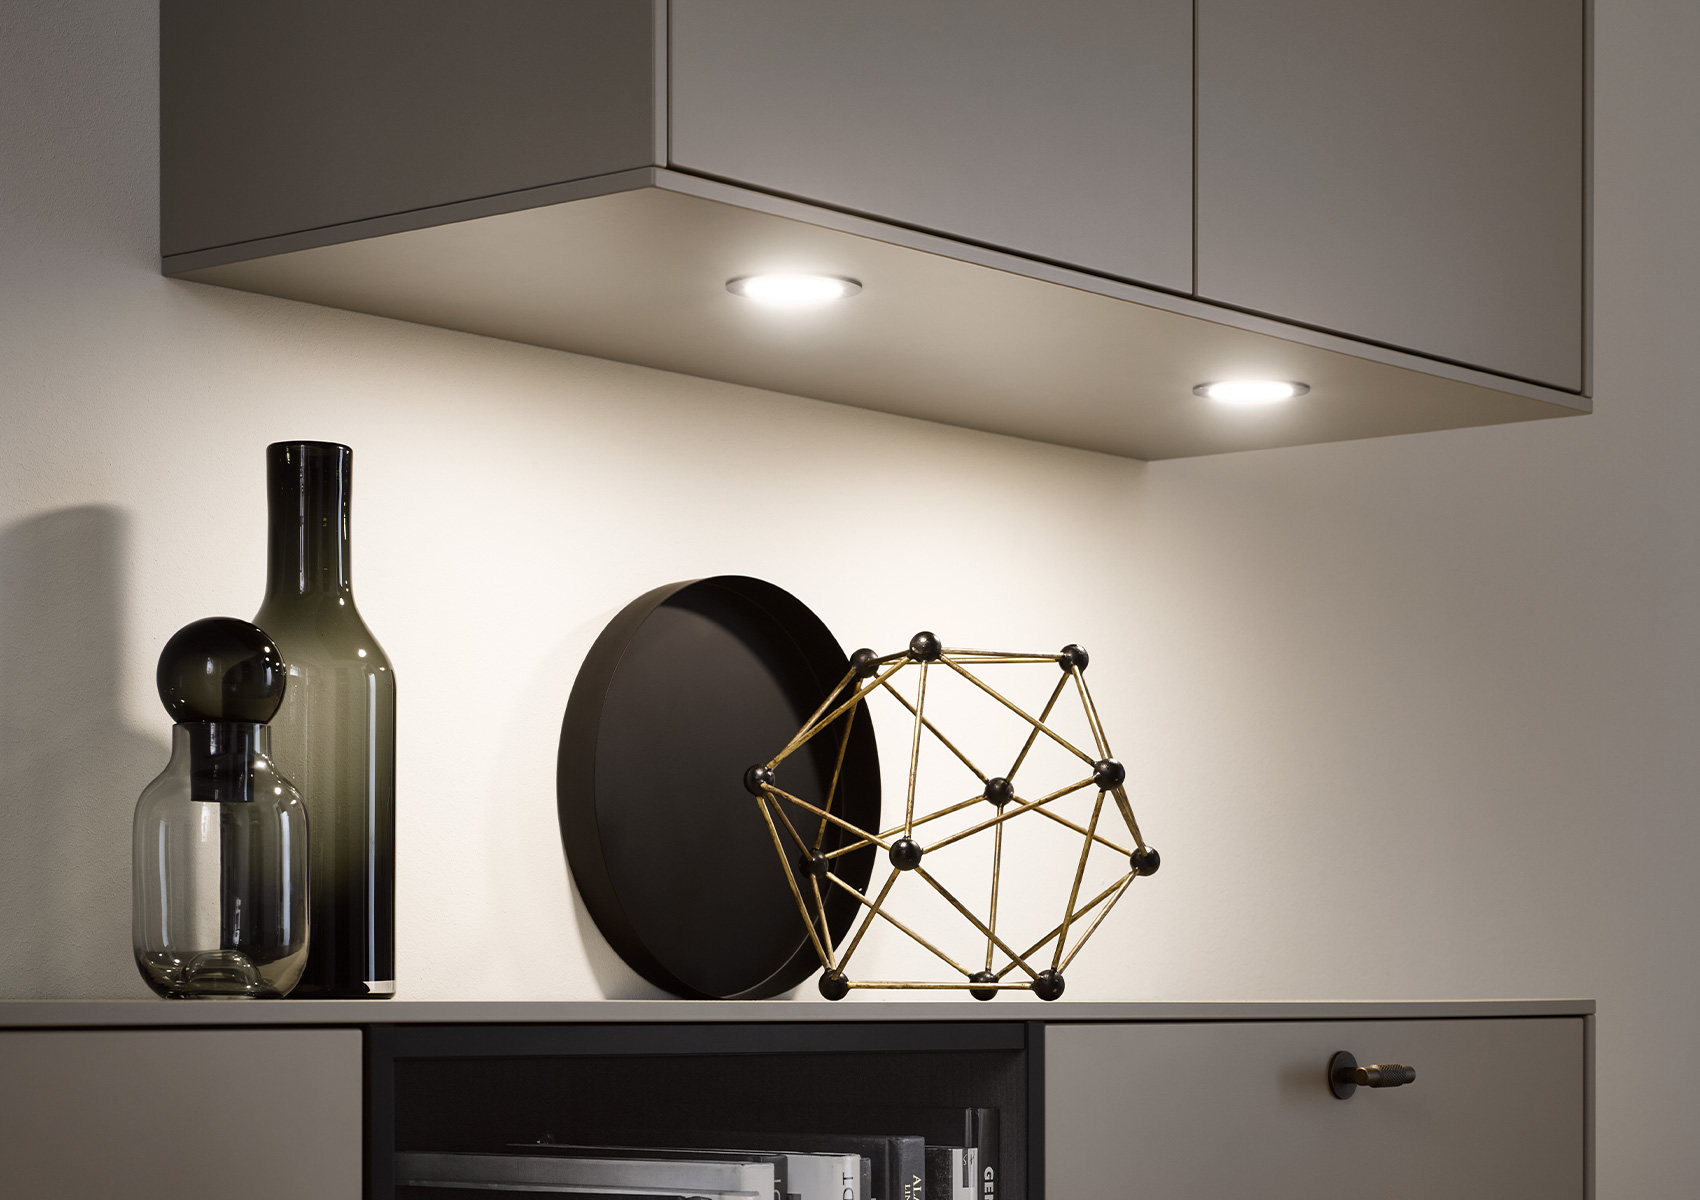 Image of the smart home LED shelf made of glass